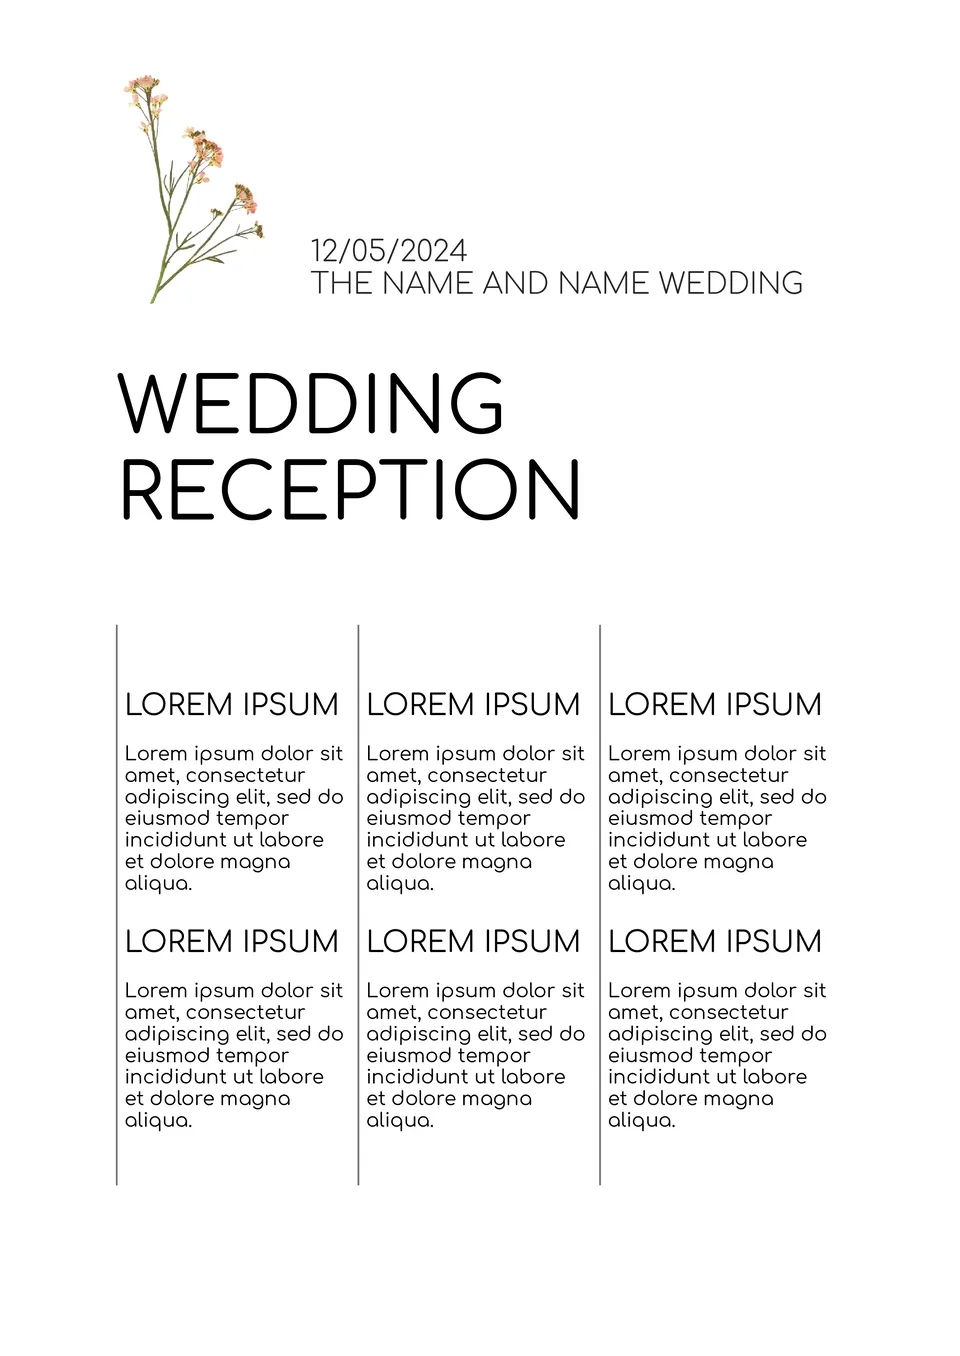 Wedding Reception Timeline Template